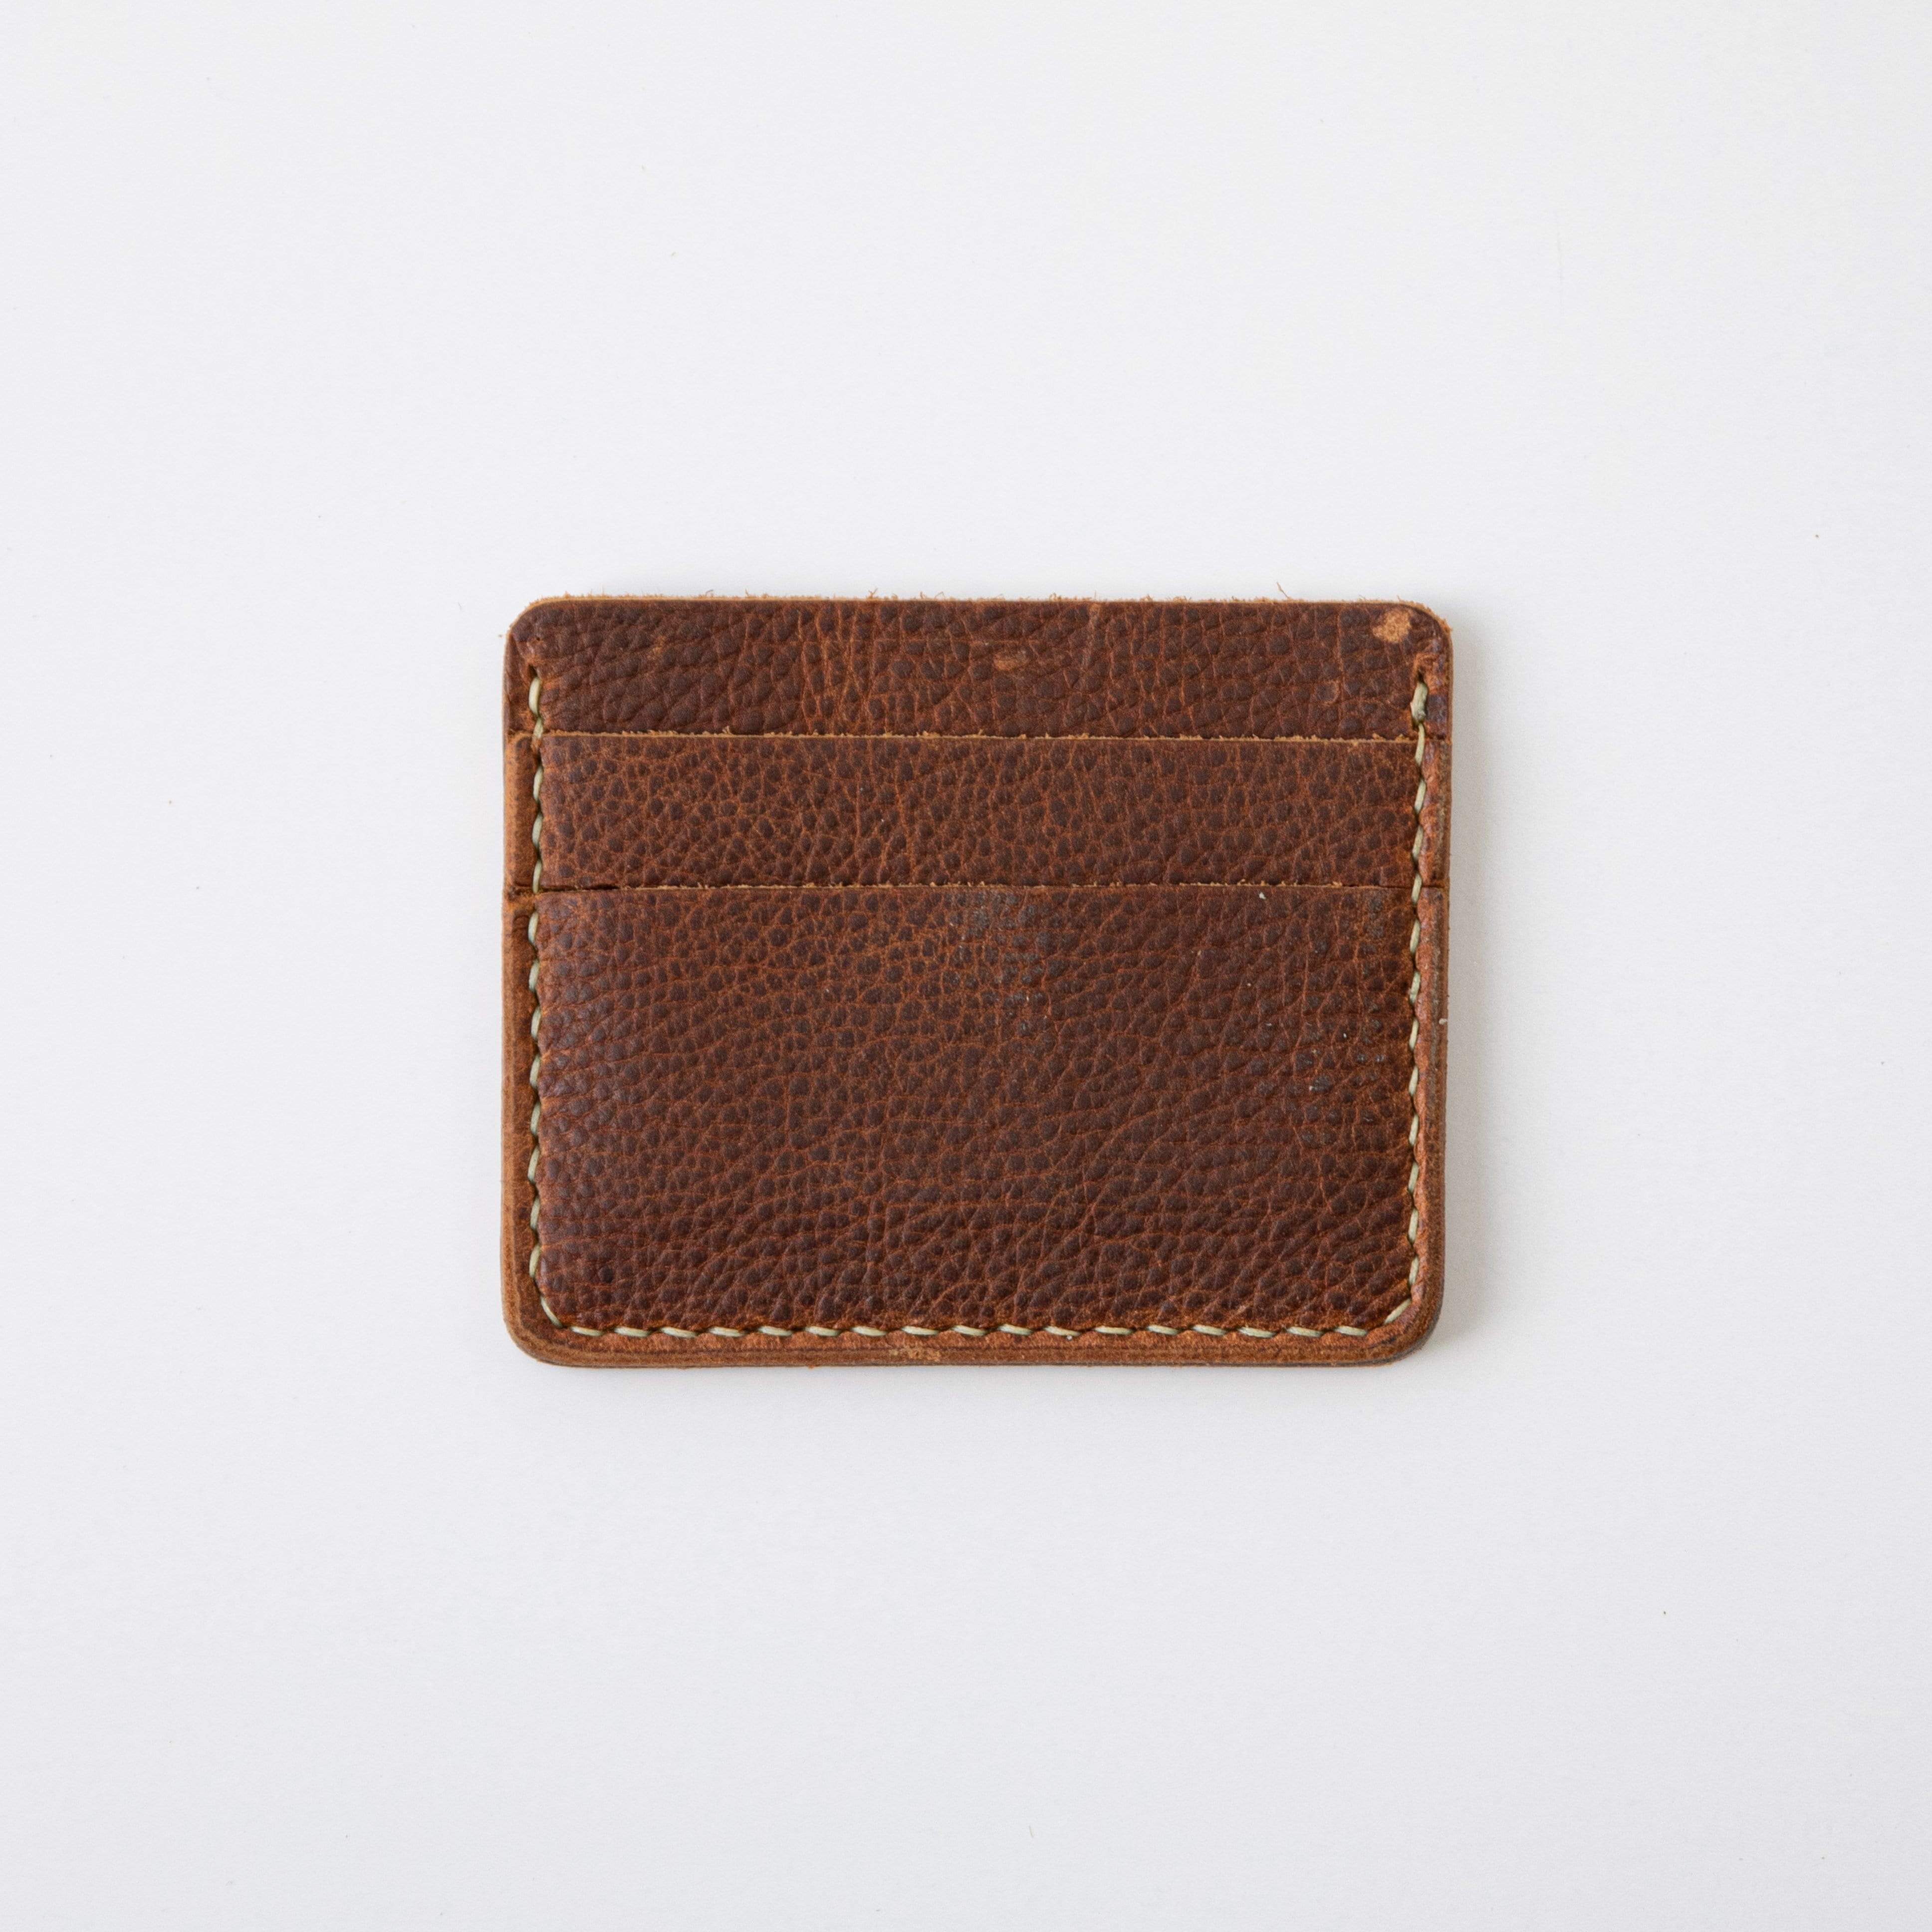 Ashland Leather Co. | Capone money clip wallet violet shell cordovan on raw  violet shell cordovan. | Instagram